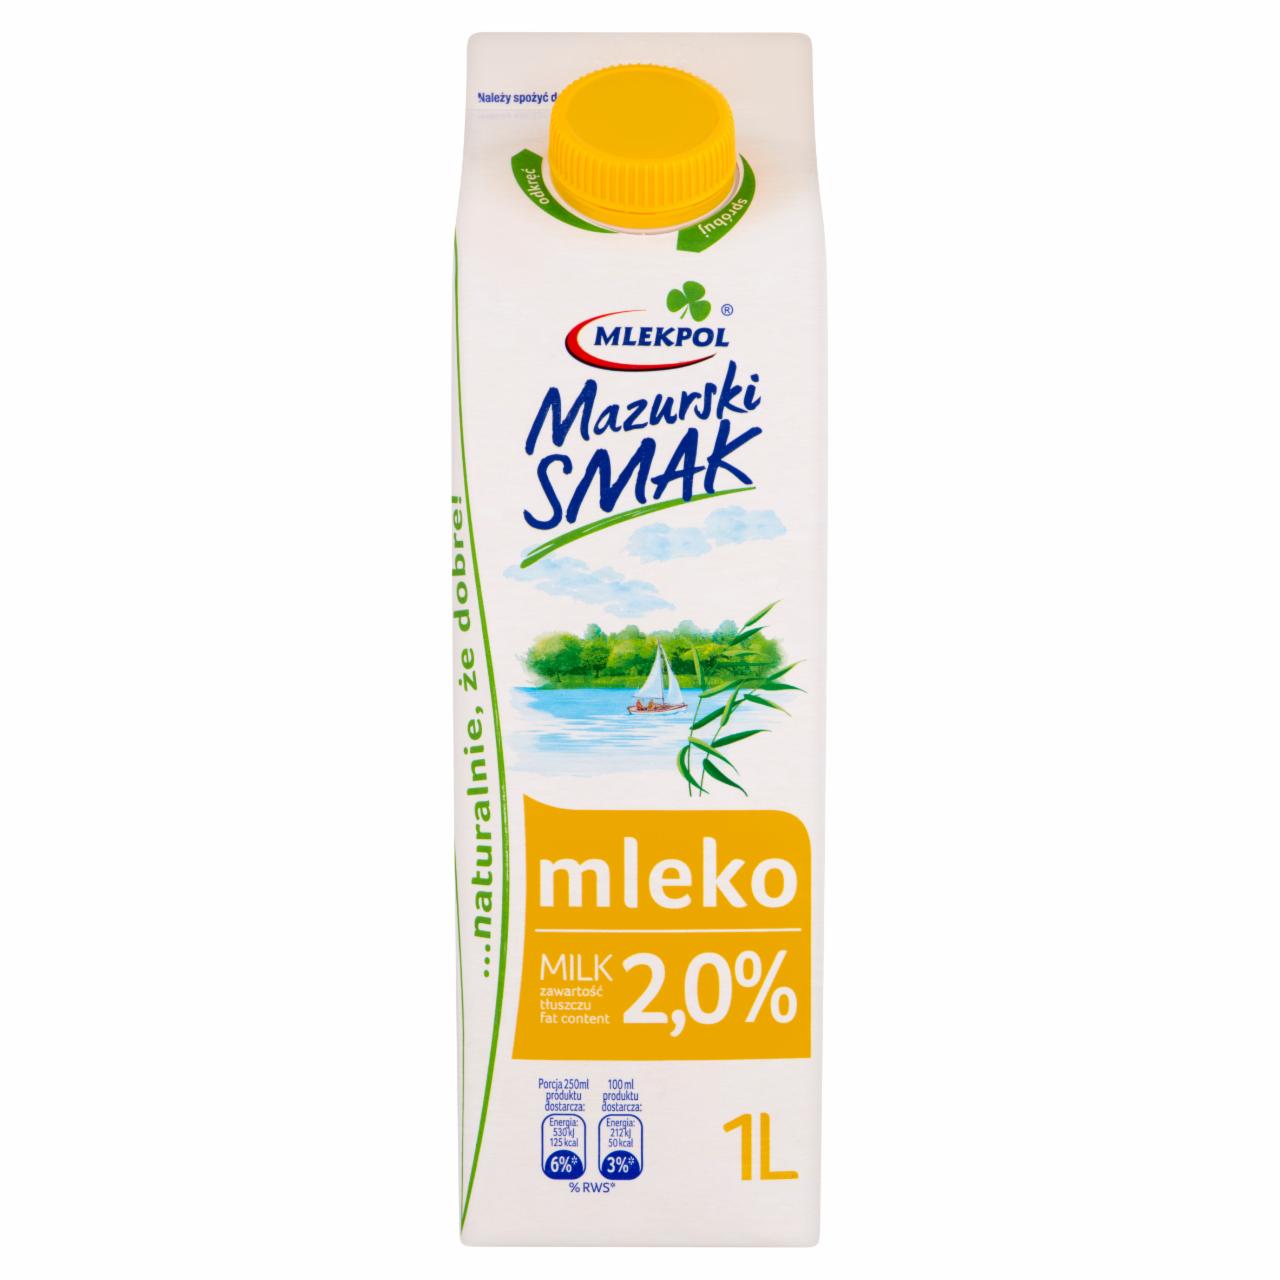 Zdjęcia - Mlekpol Mazurski Smak Mleko 2,0 % 1 l